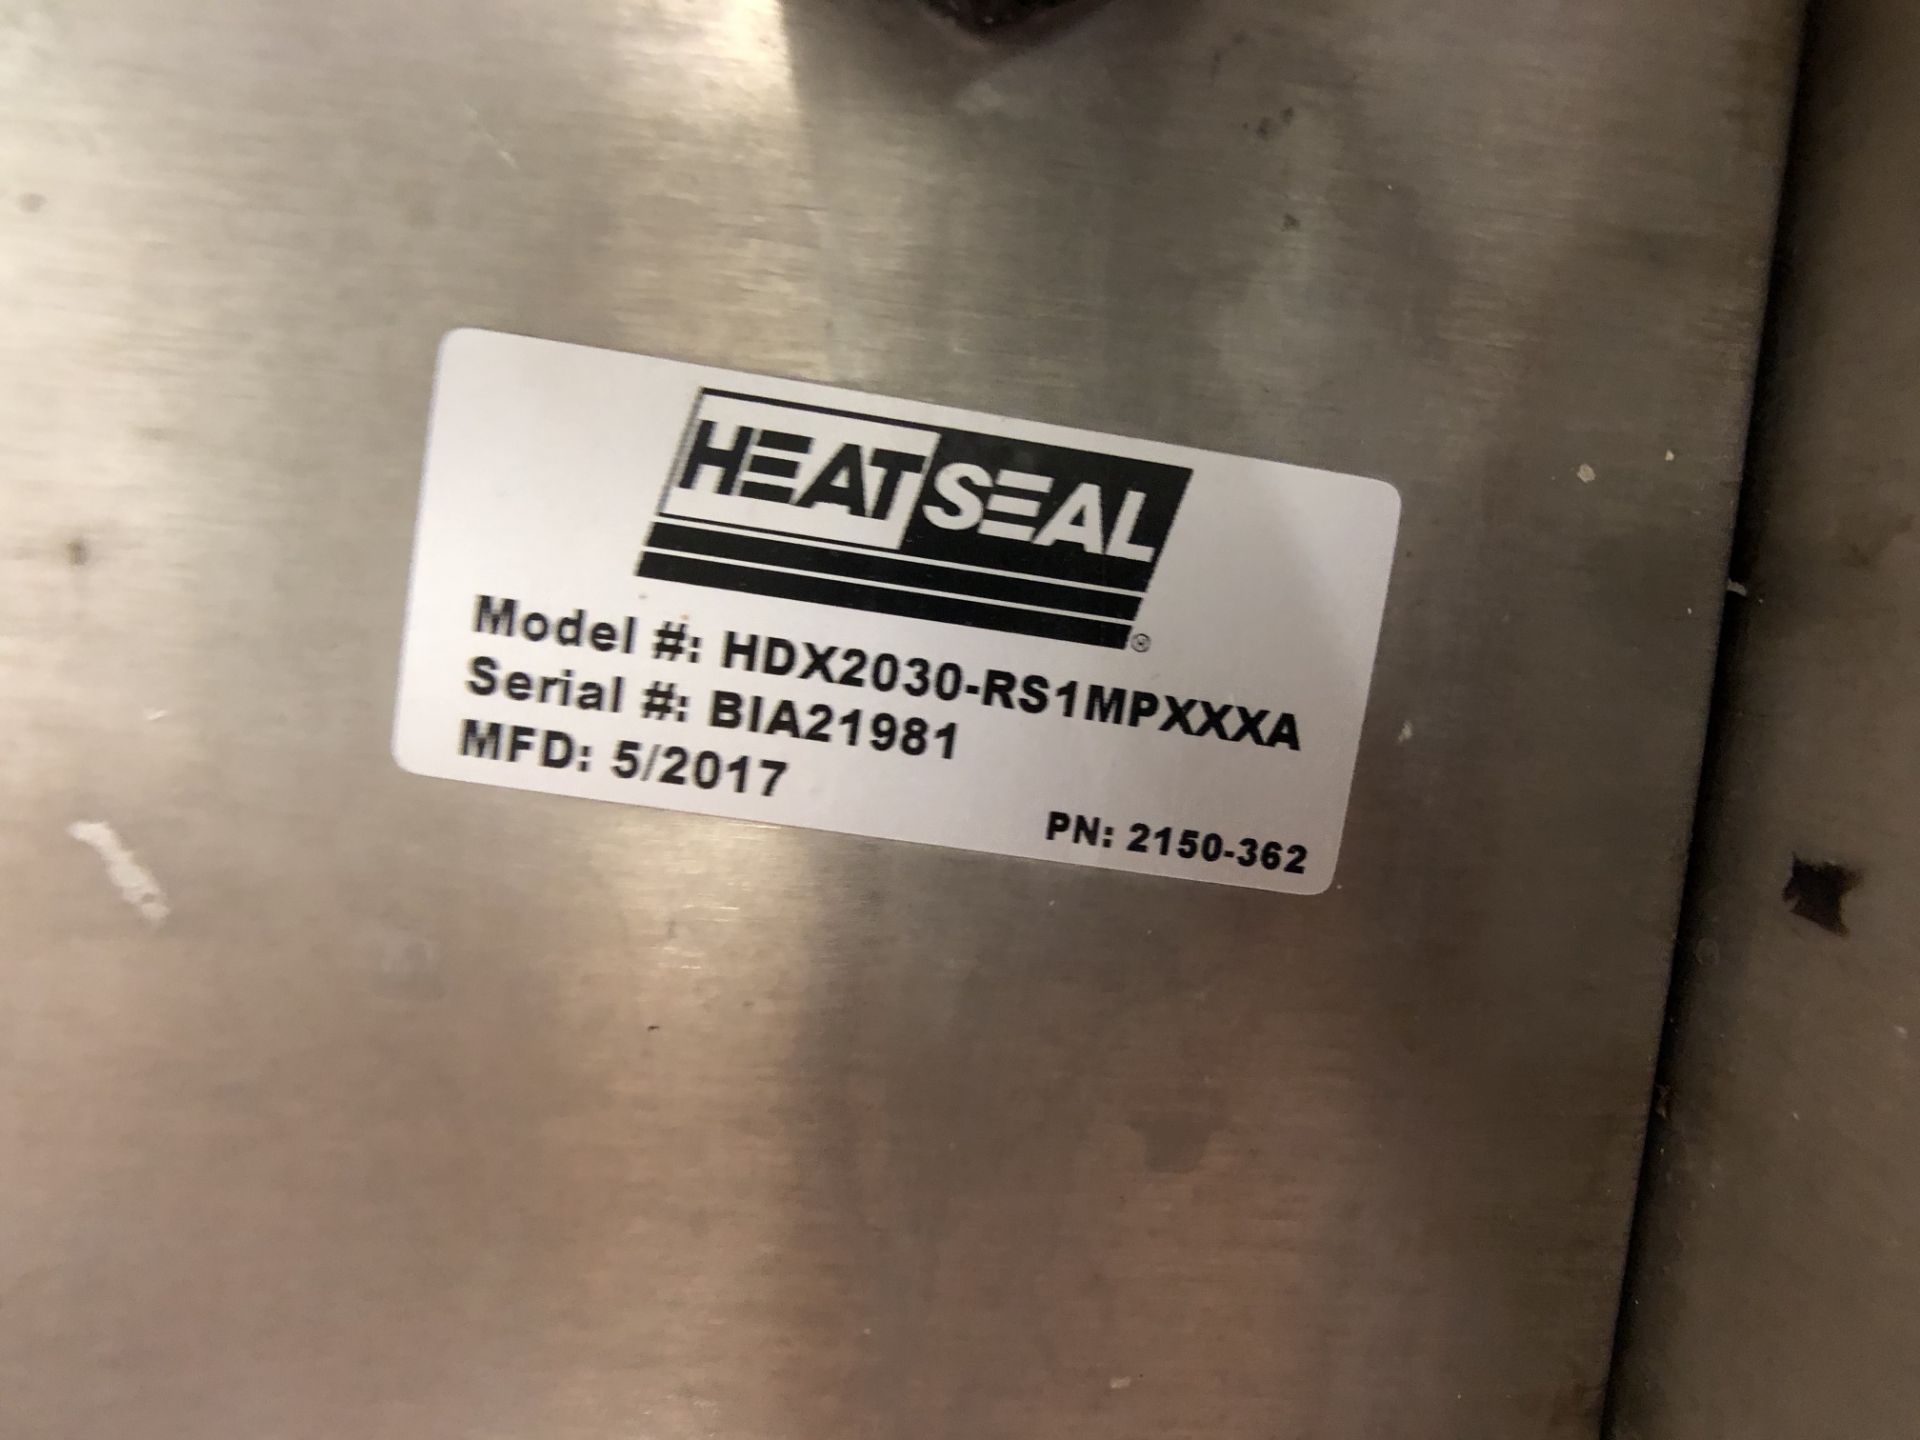 2017 HEATSEAL L-BAR SEALER, MODEL HDX2030-RS1MPXXXA, S/NBIA21981, 1 PHASE, 120 V - Image 8 of 9